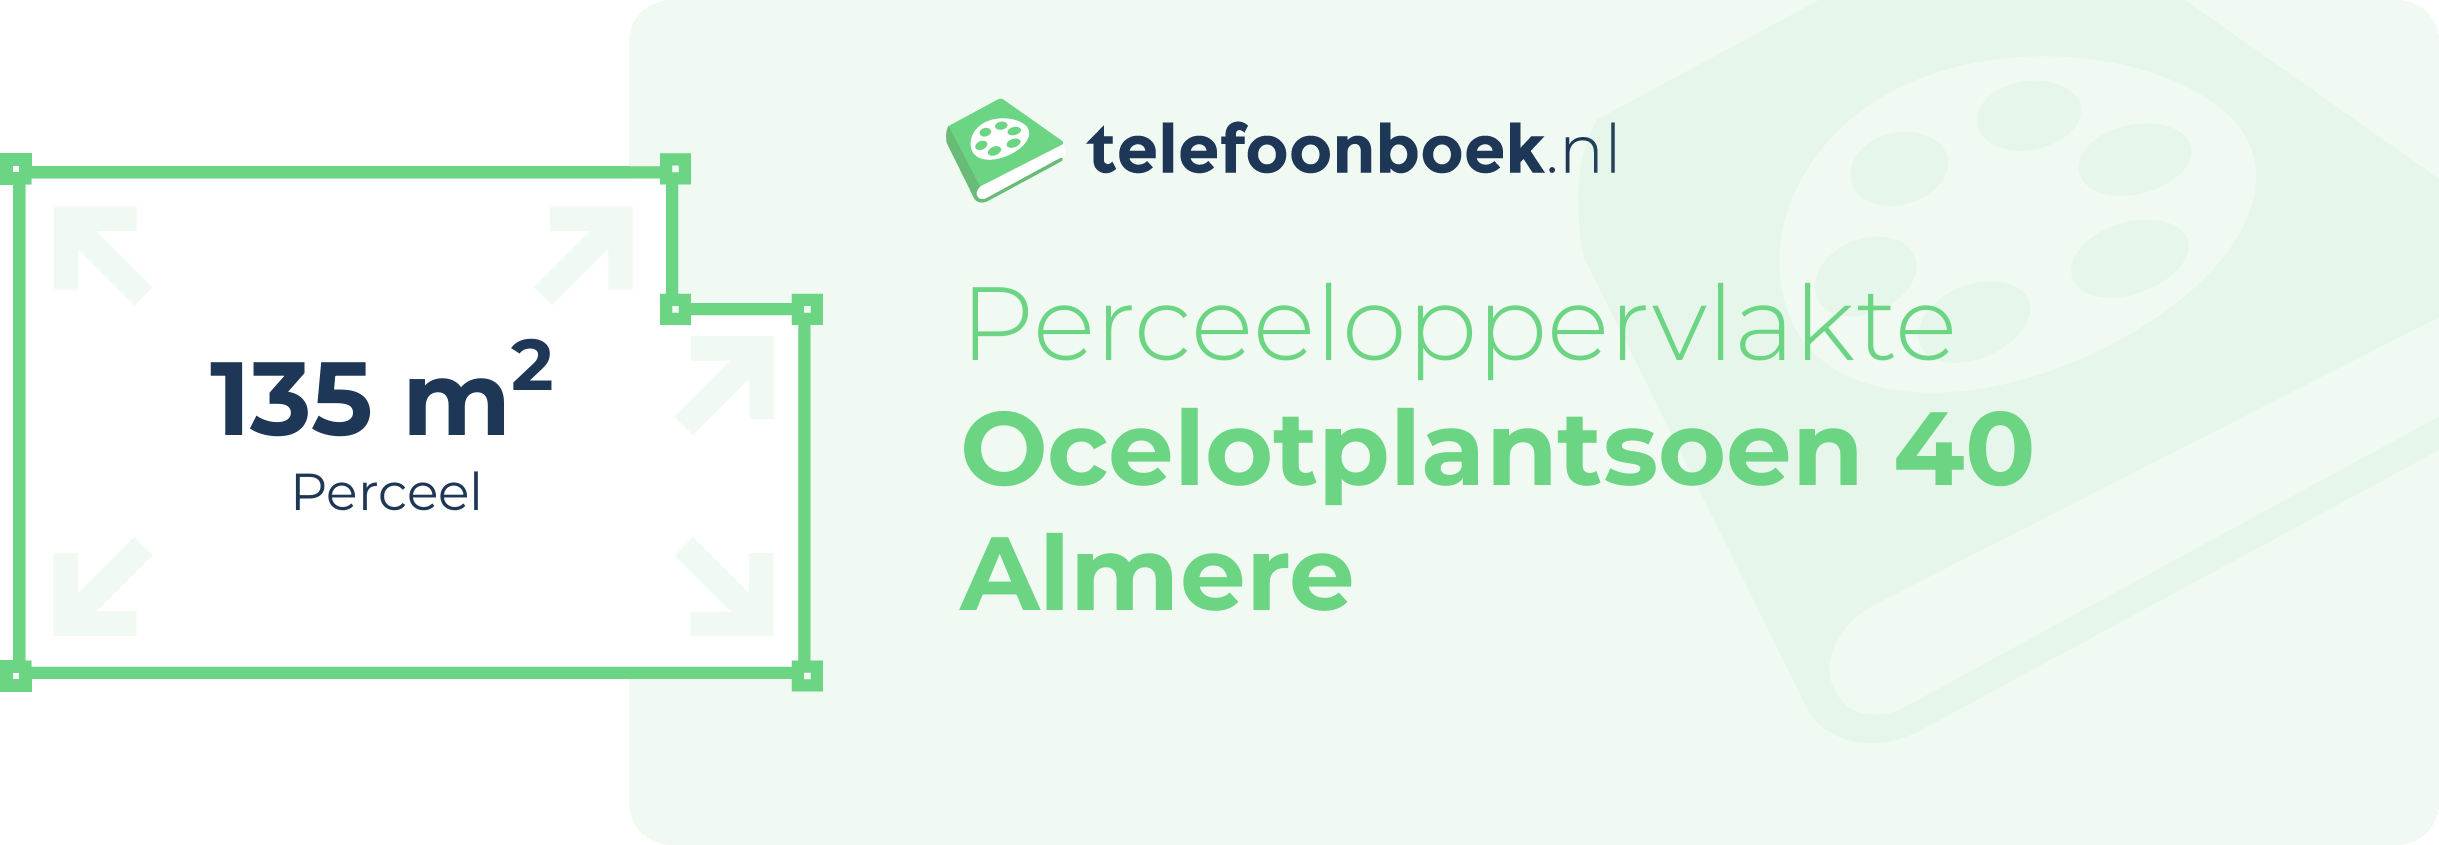 Perceeloppervlakte Ocelotplantsoen 40 Almere